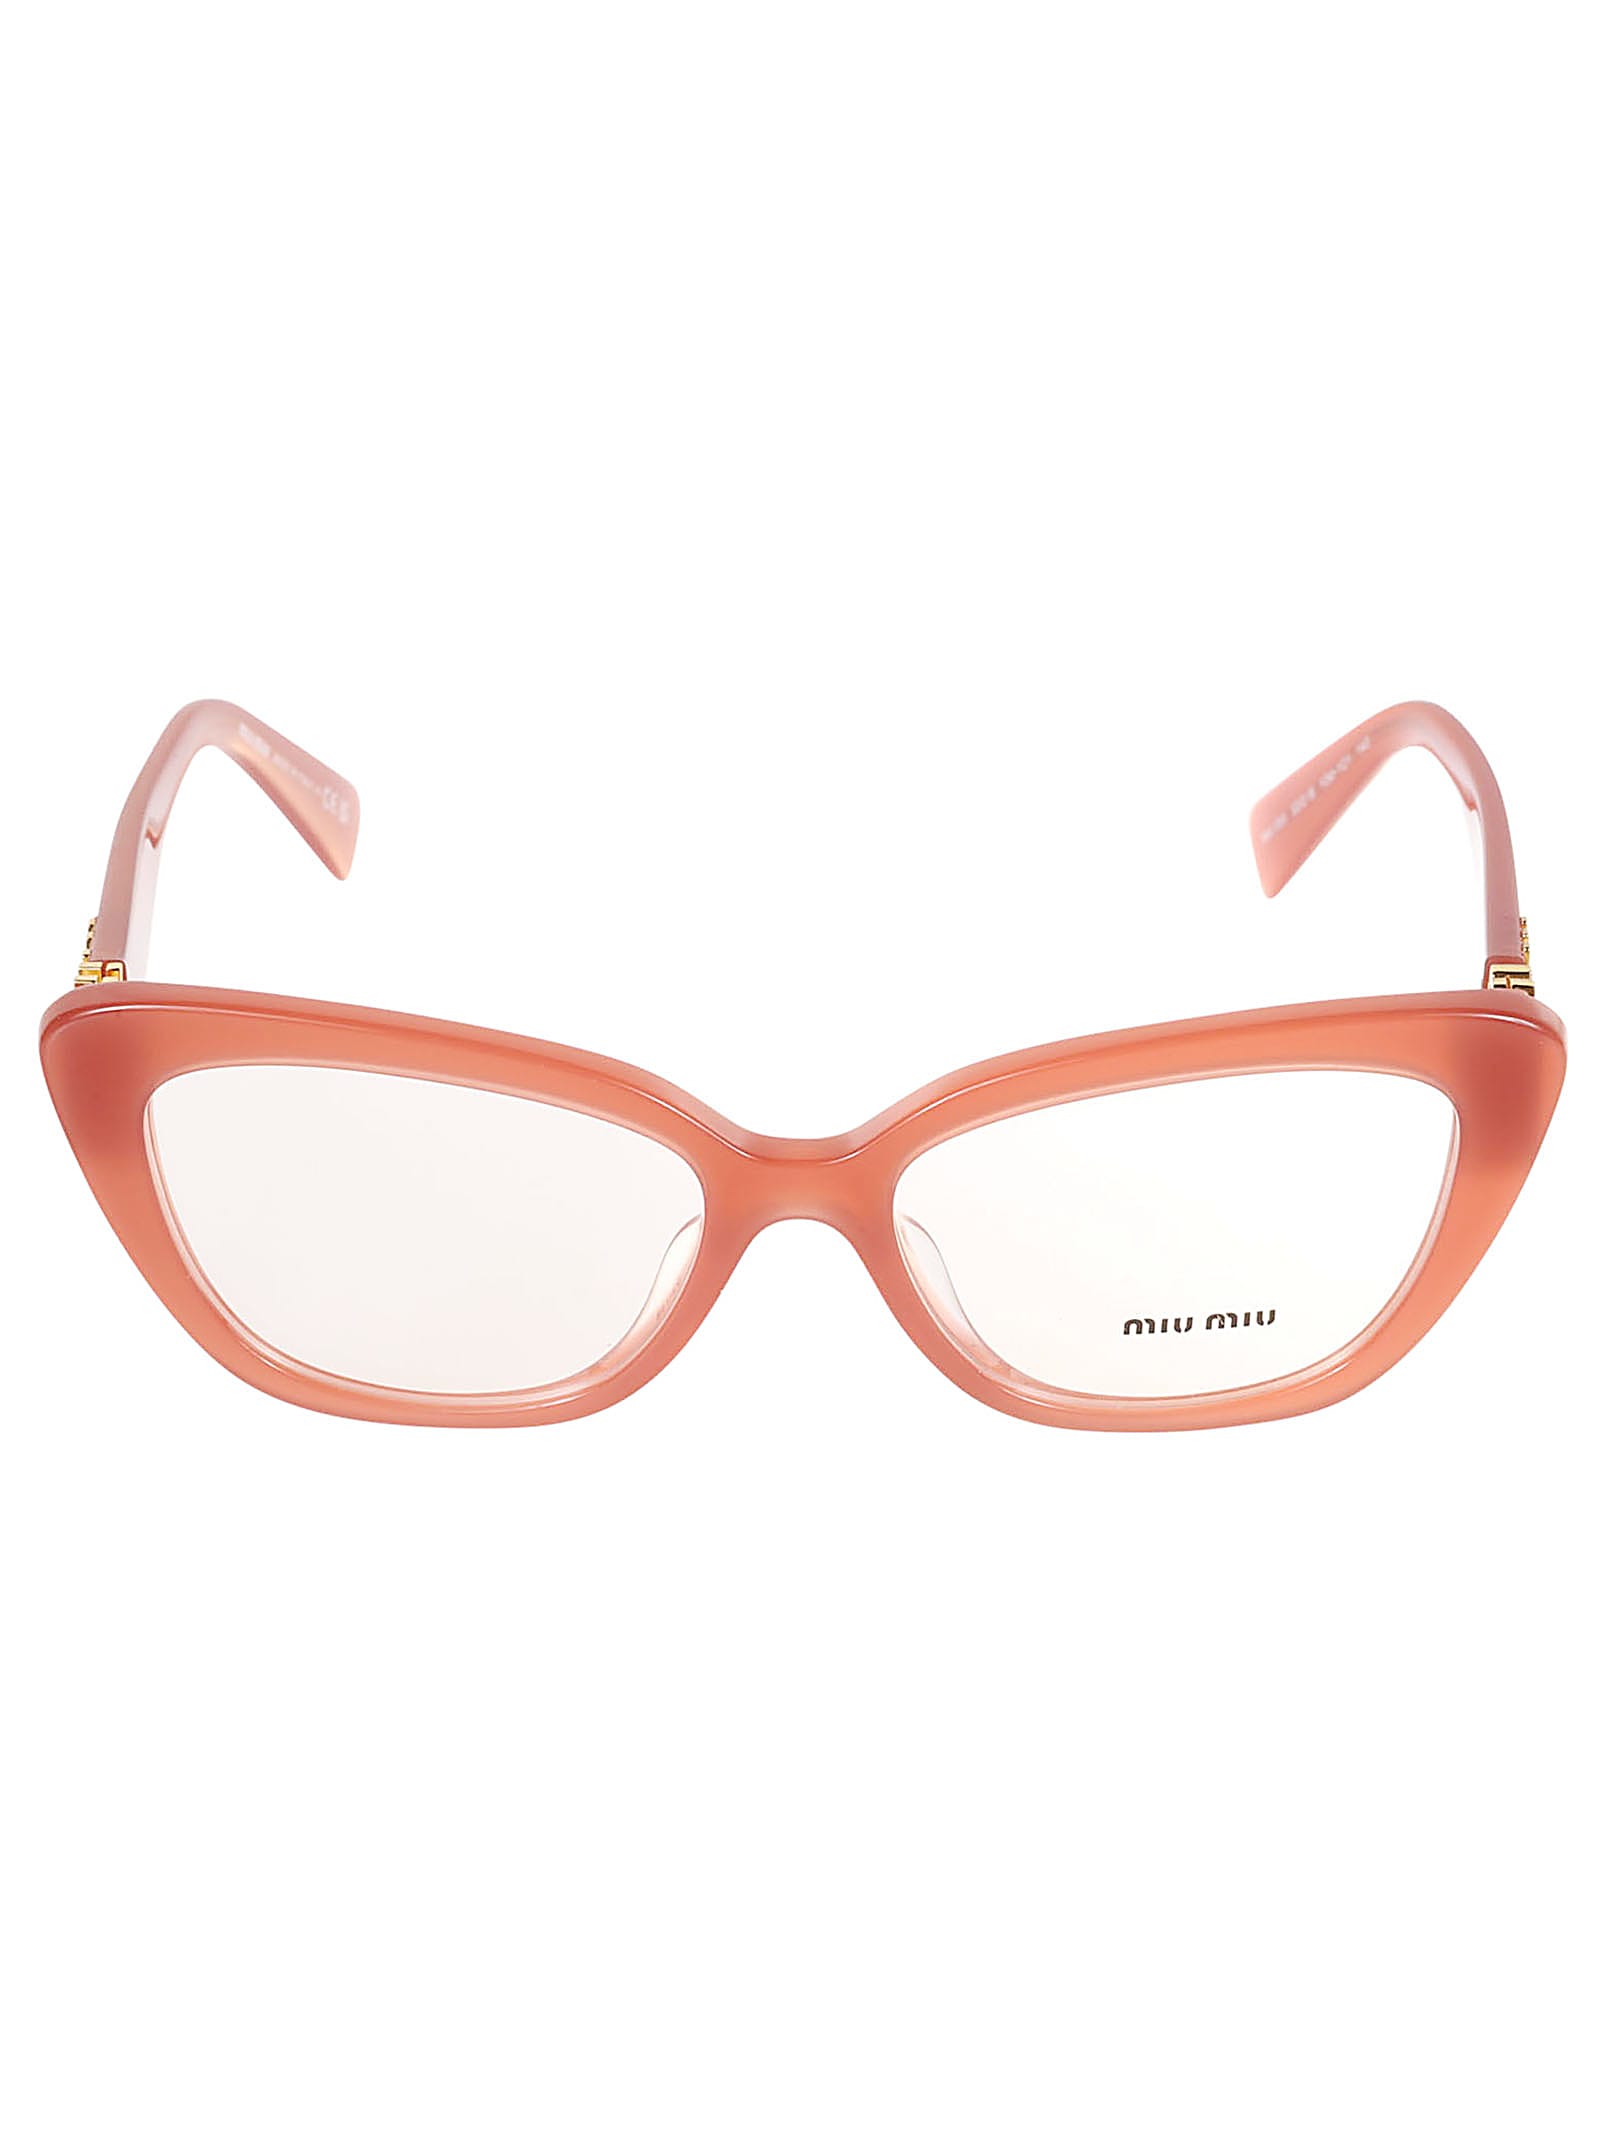 Metal Hinges Cat-eye Glasses